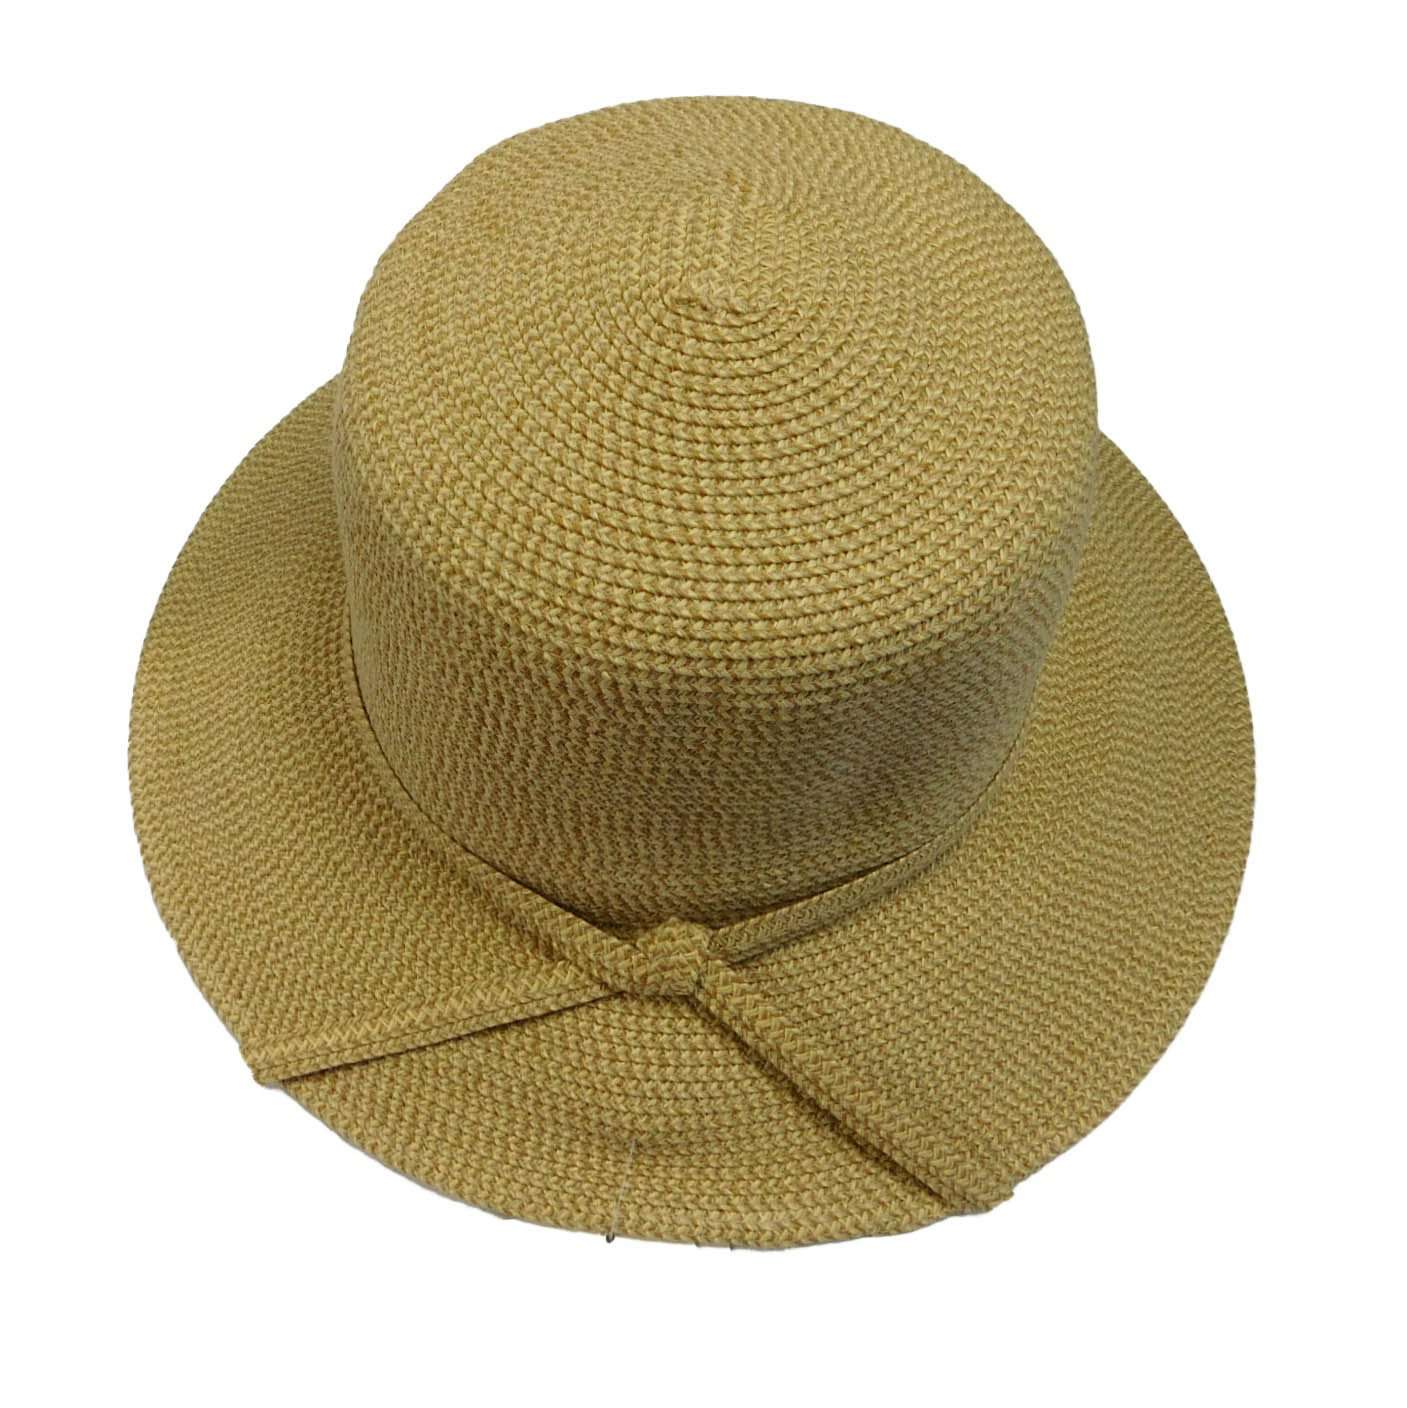 Big Brim Hat with Box Crown Wide Brim Hat Jeanne Simmons WSPS670TN Tan  